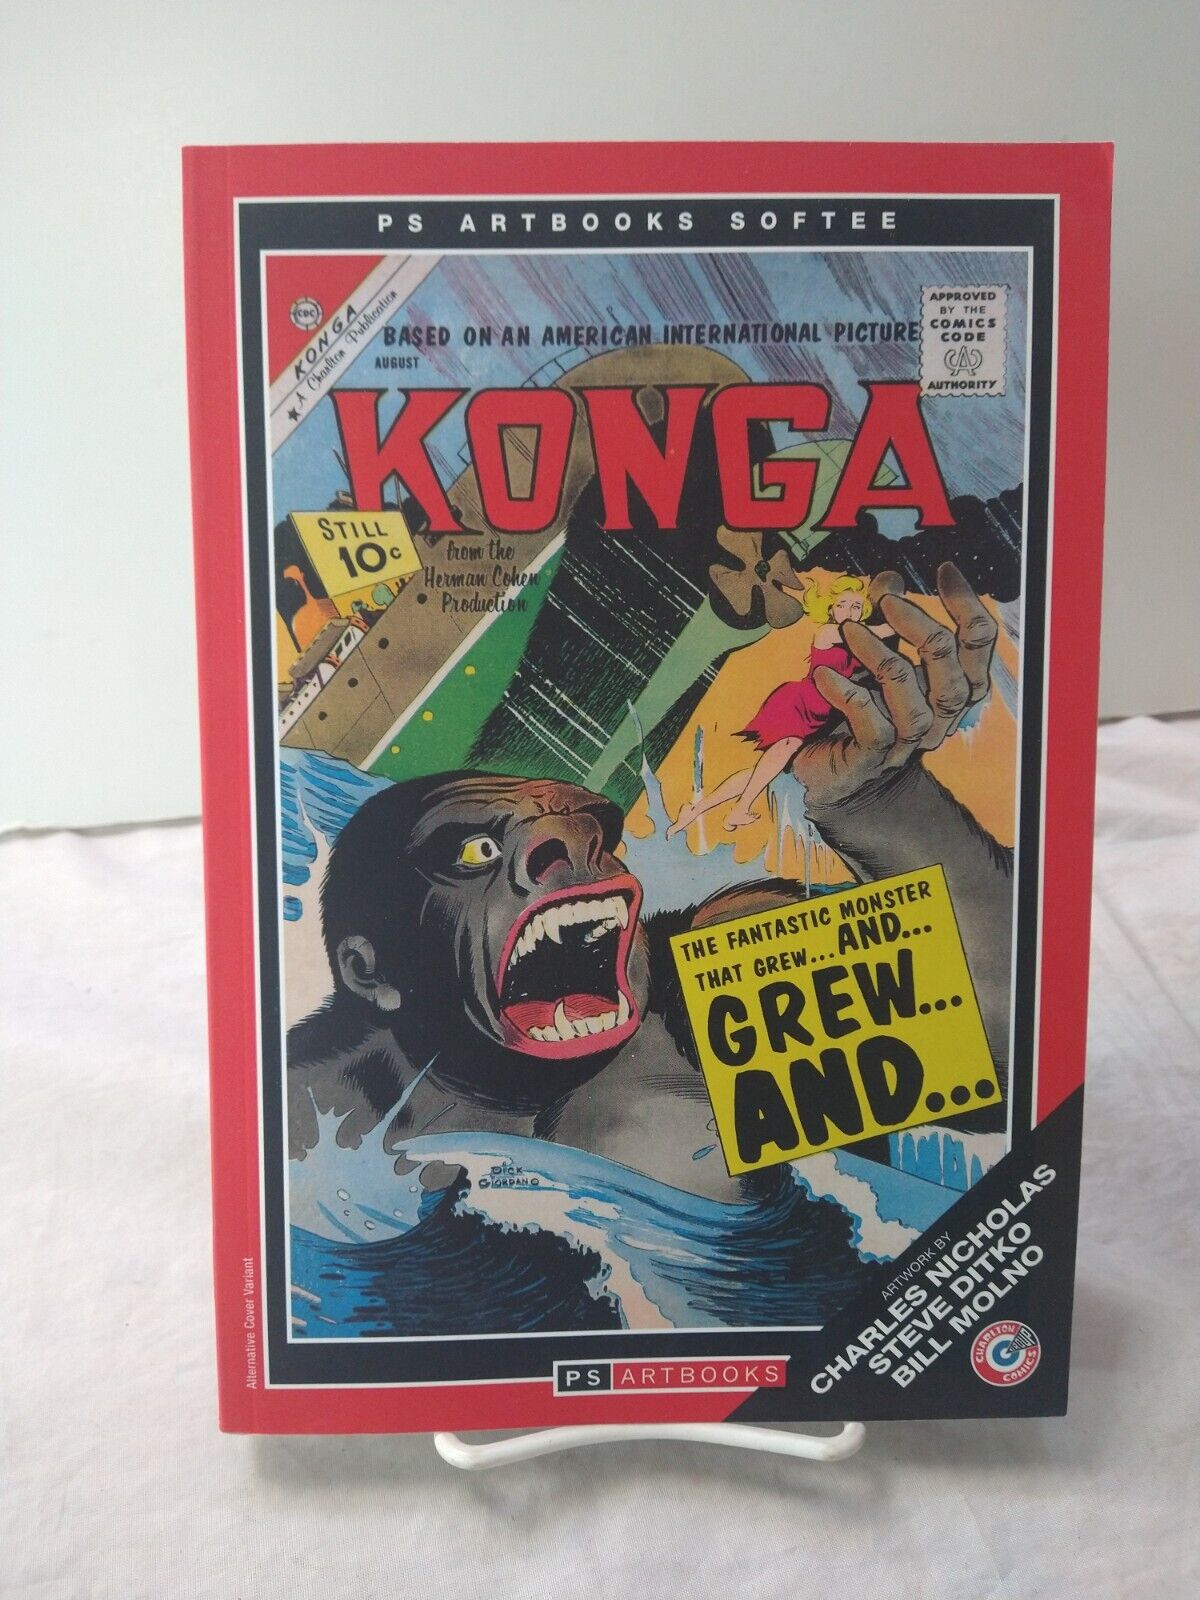 Konga Volume 1 Trade Paperback PSArtbooks